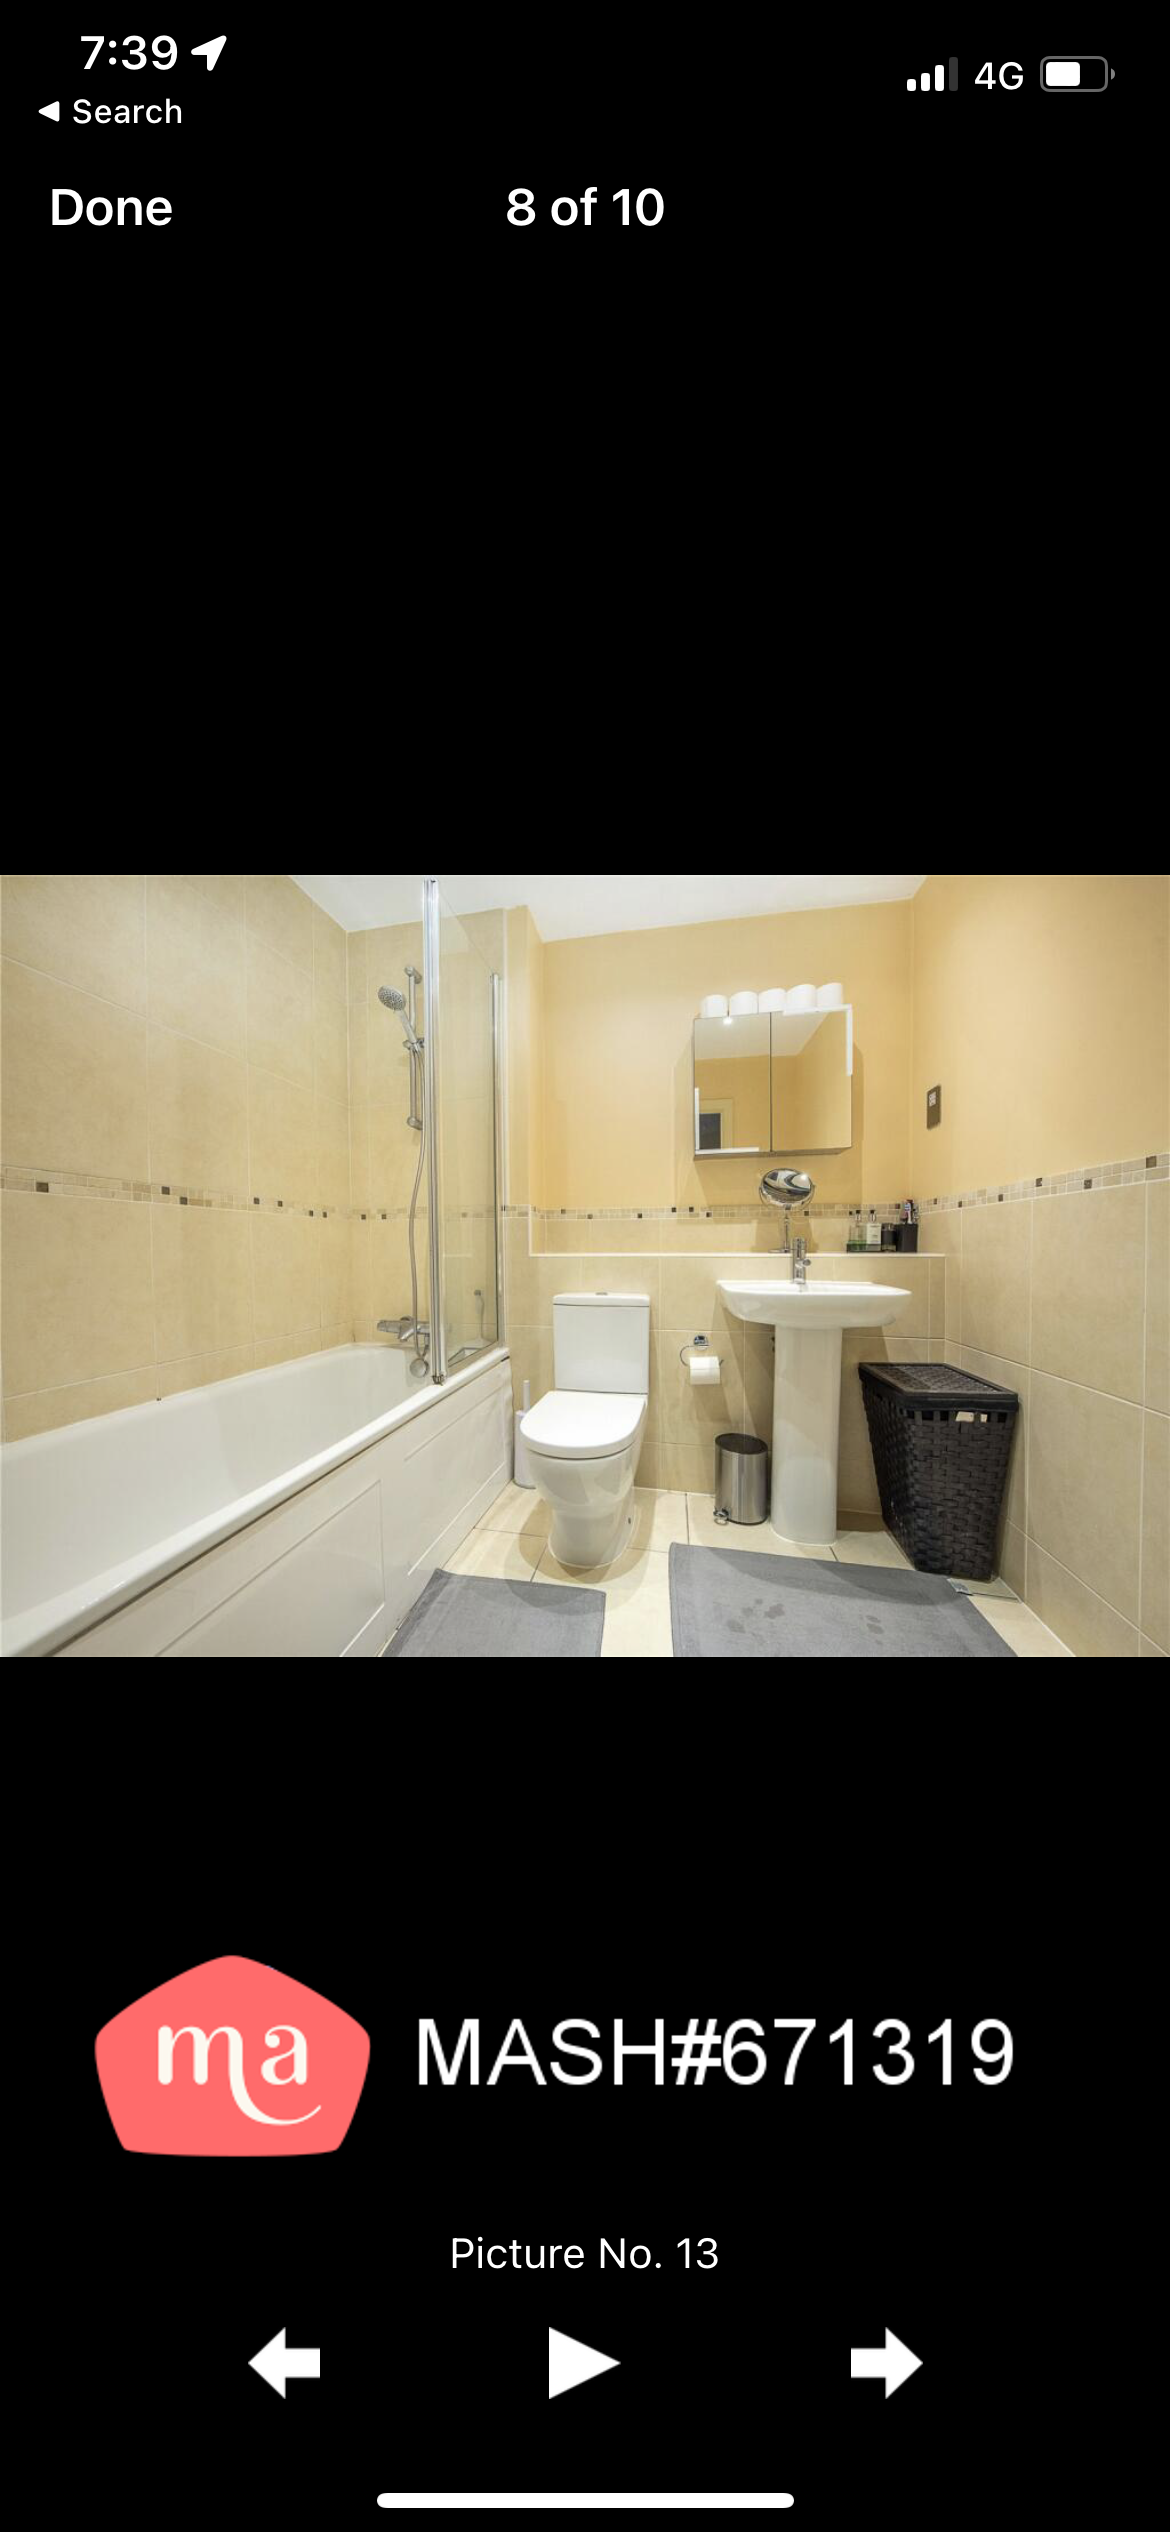 1 Bedroom Flat to rent in Kingston upon thames - Mashroom